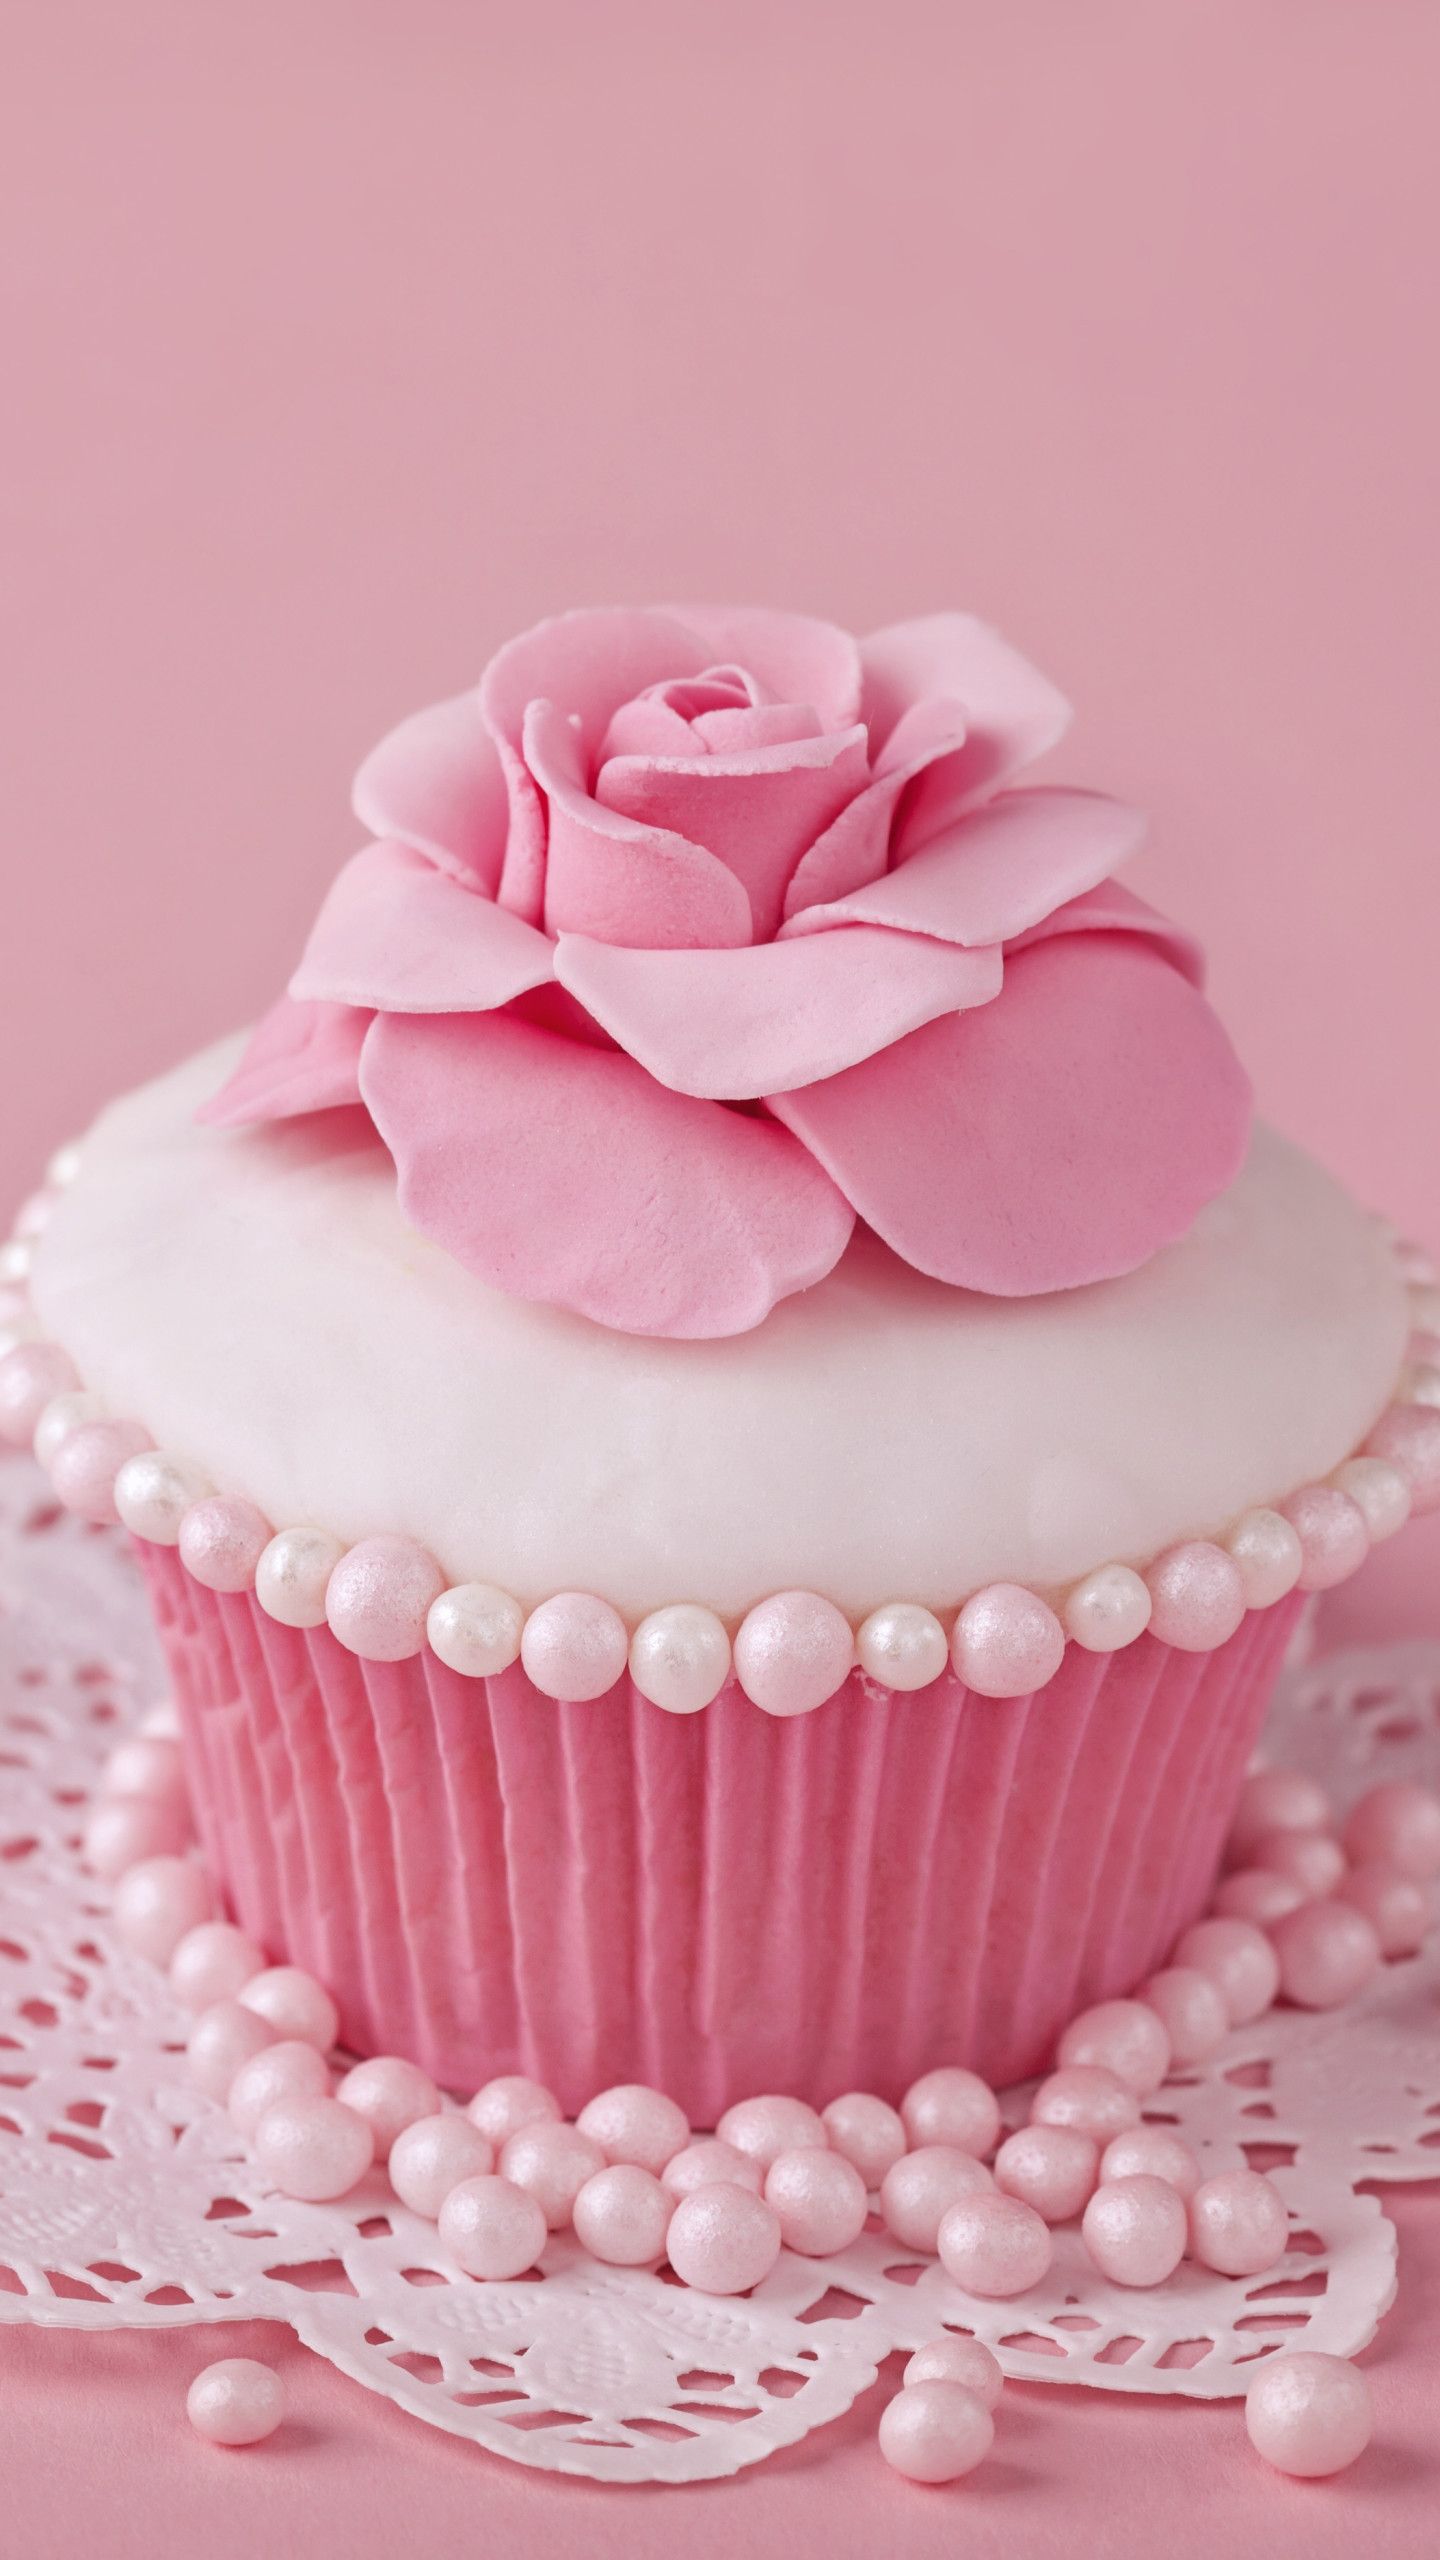 Food Cupcake Pink Sweets Flower. Wallpaper 669585. Cupcakes wallpaper, Pink sweets, Pink cupcakes